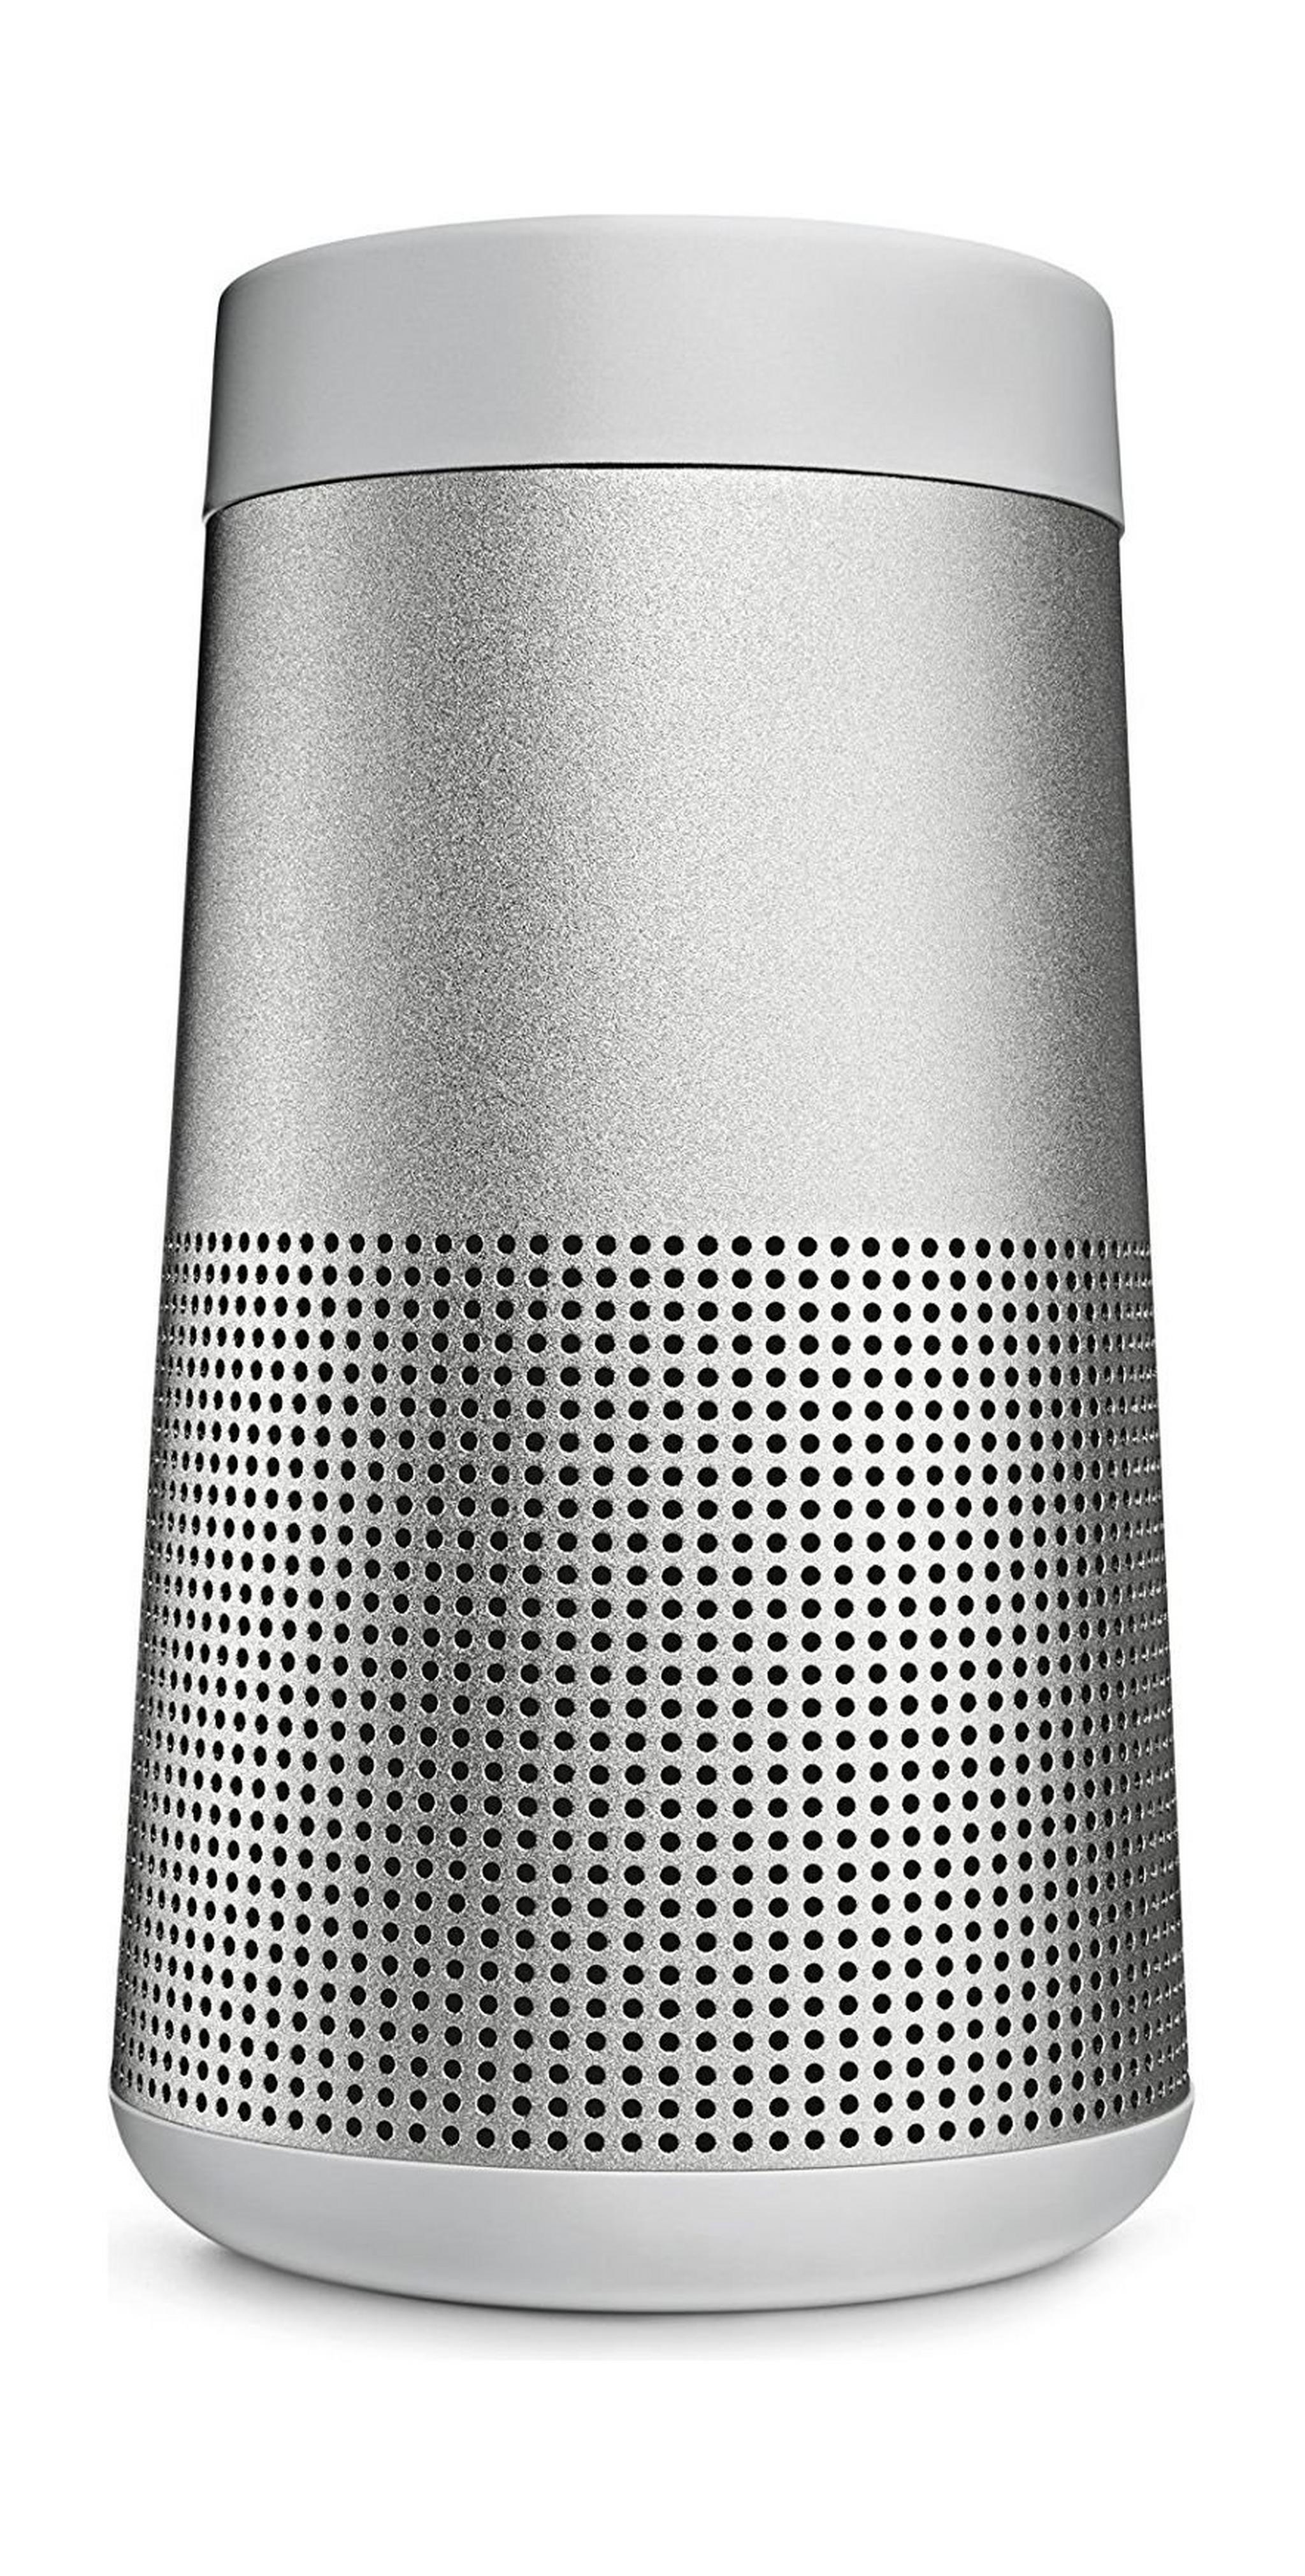 Bose Soundlink Revolve II - Silver